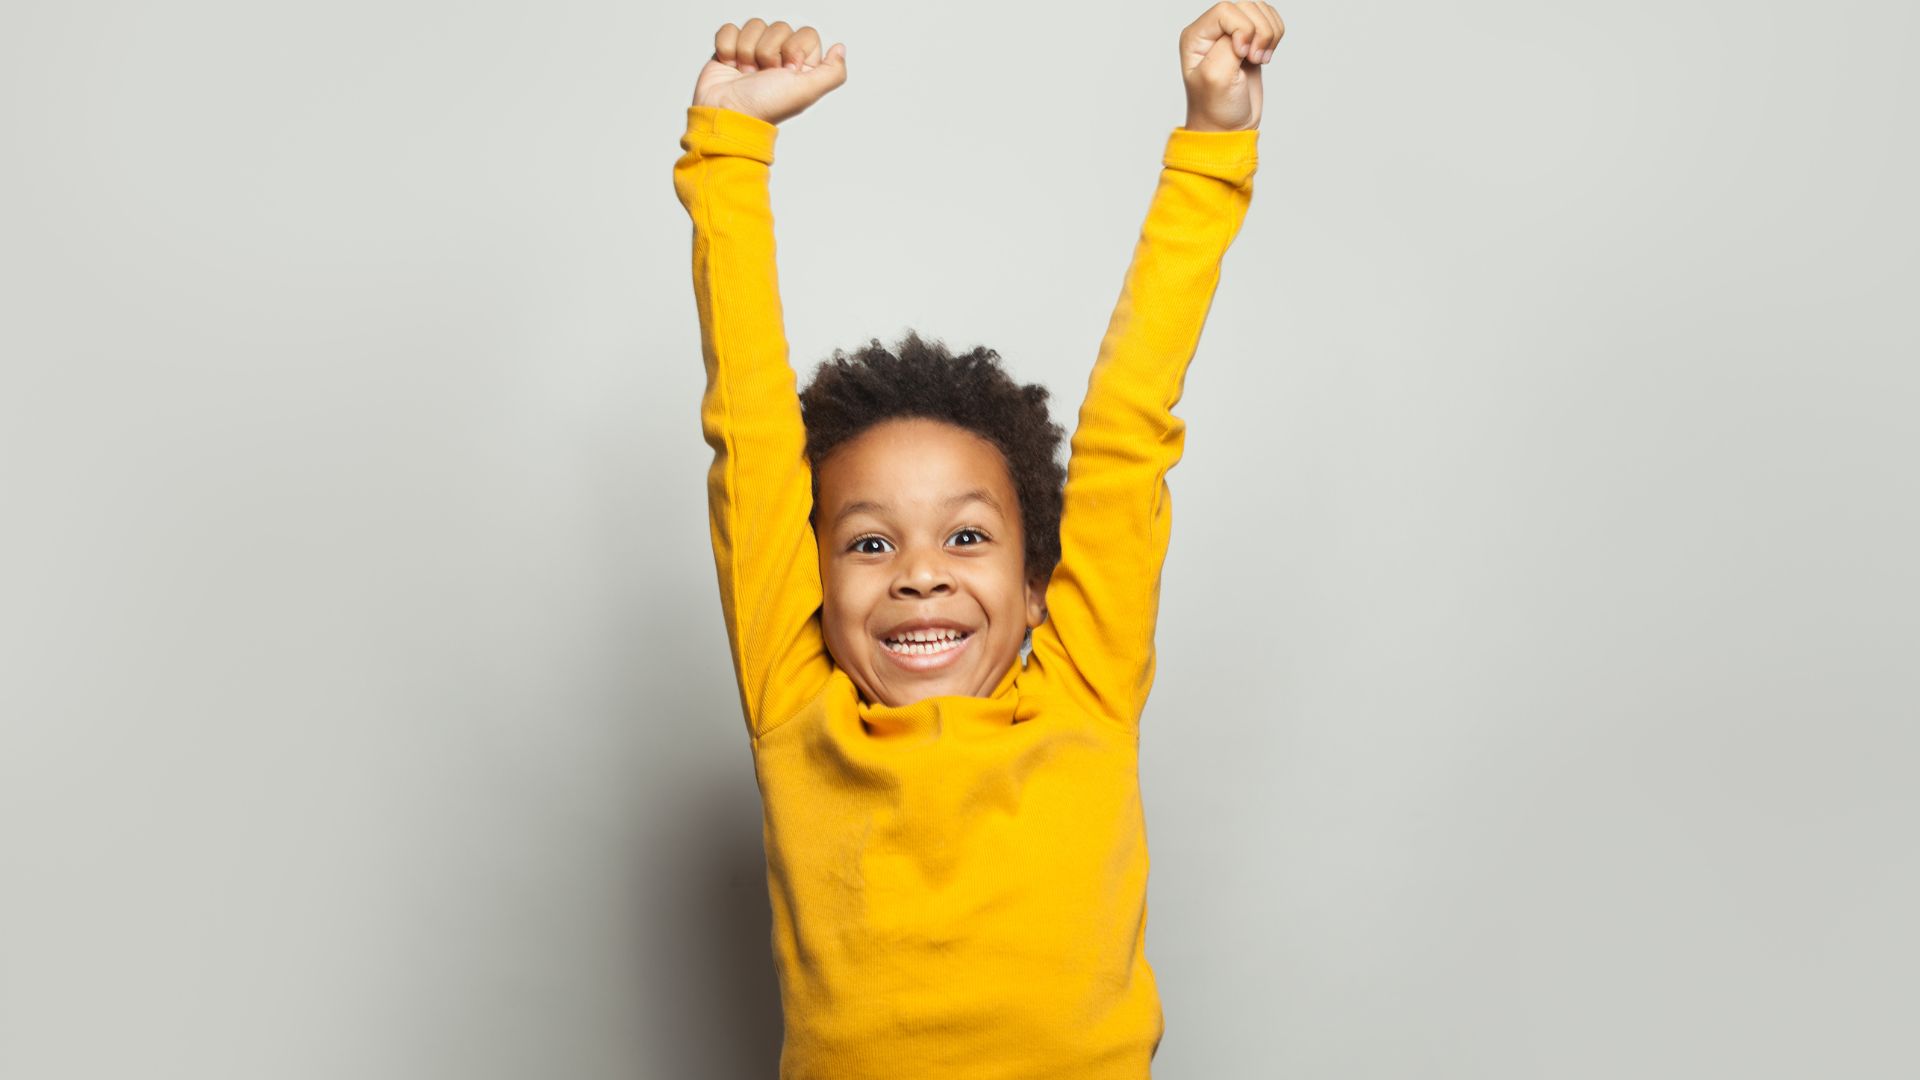 S2E8 – Encouragement vs. Praise: The Key to Nurturing Self-Esteem in Your Child